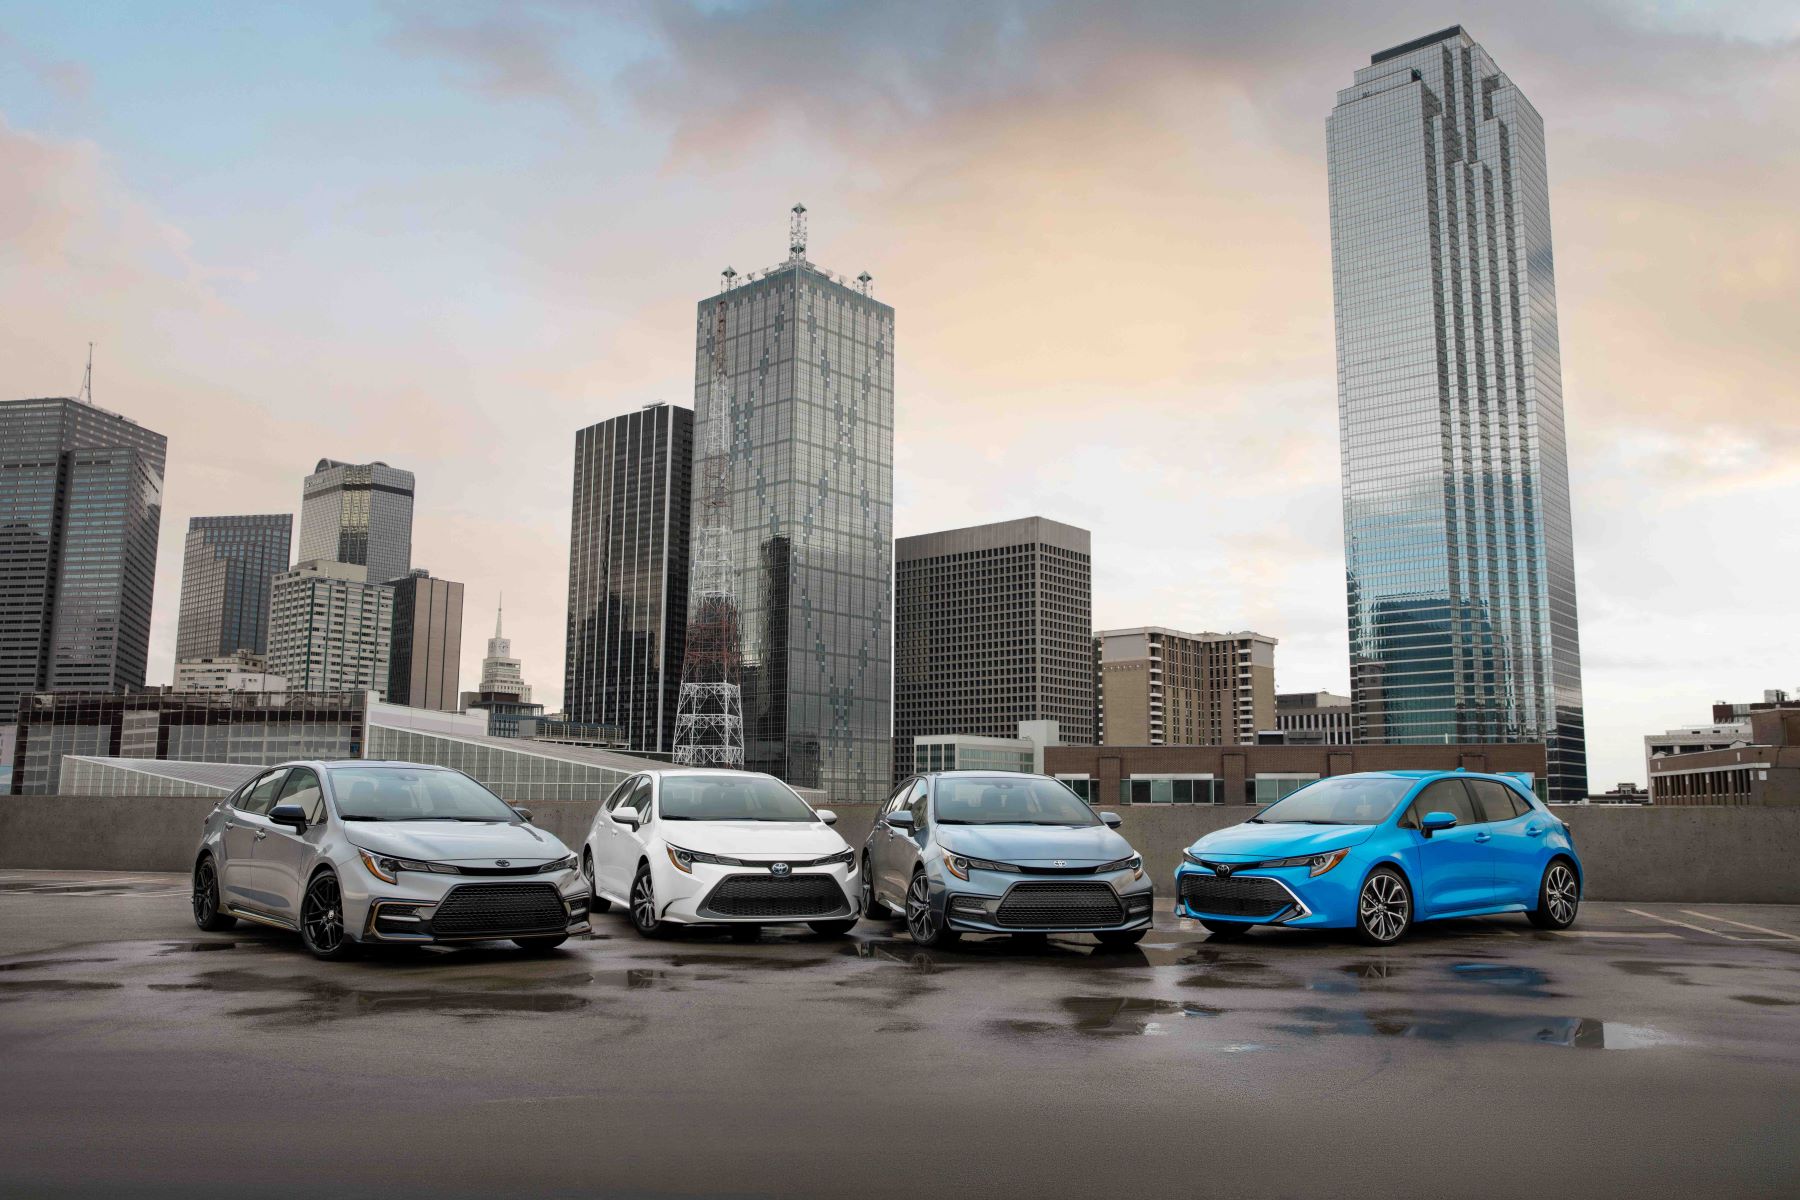 The 2022 Toyota Corolla family, featuring the Corolla sedan, Corolla Hatchback, and Corolla Apex Edition